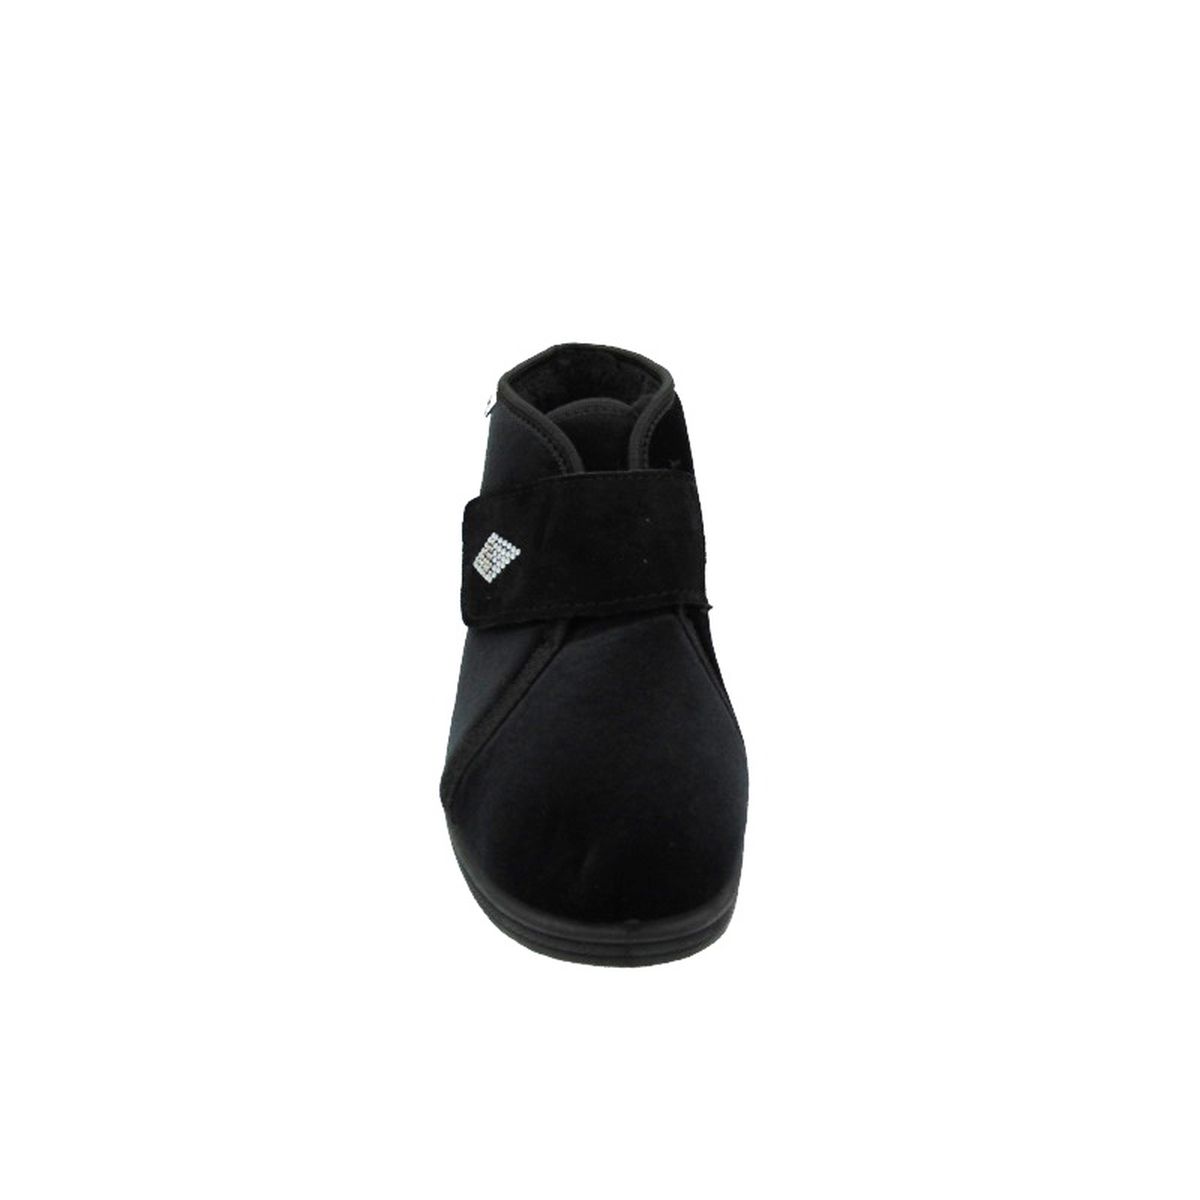 Pantofola Donna Velluto nero, Interno lana, con strappo Emanuela 536 Neroimg_2